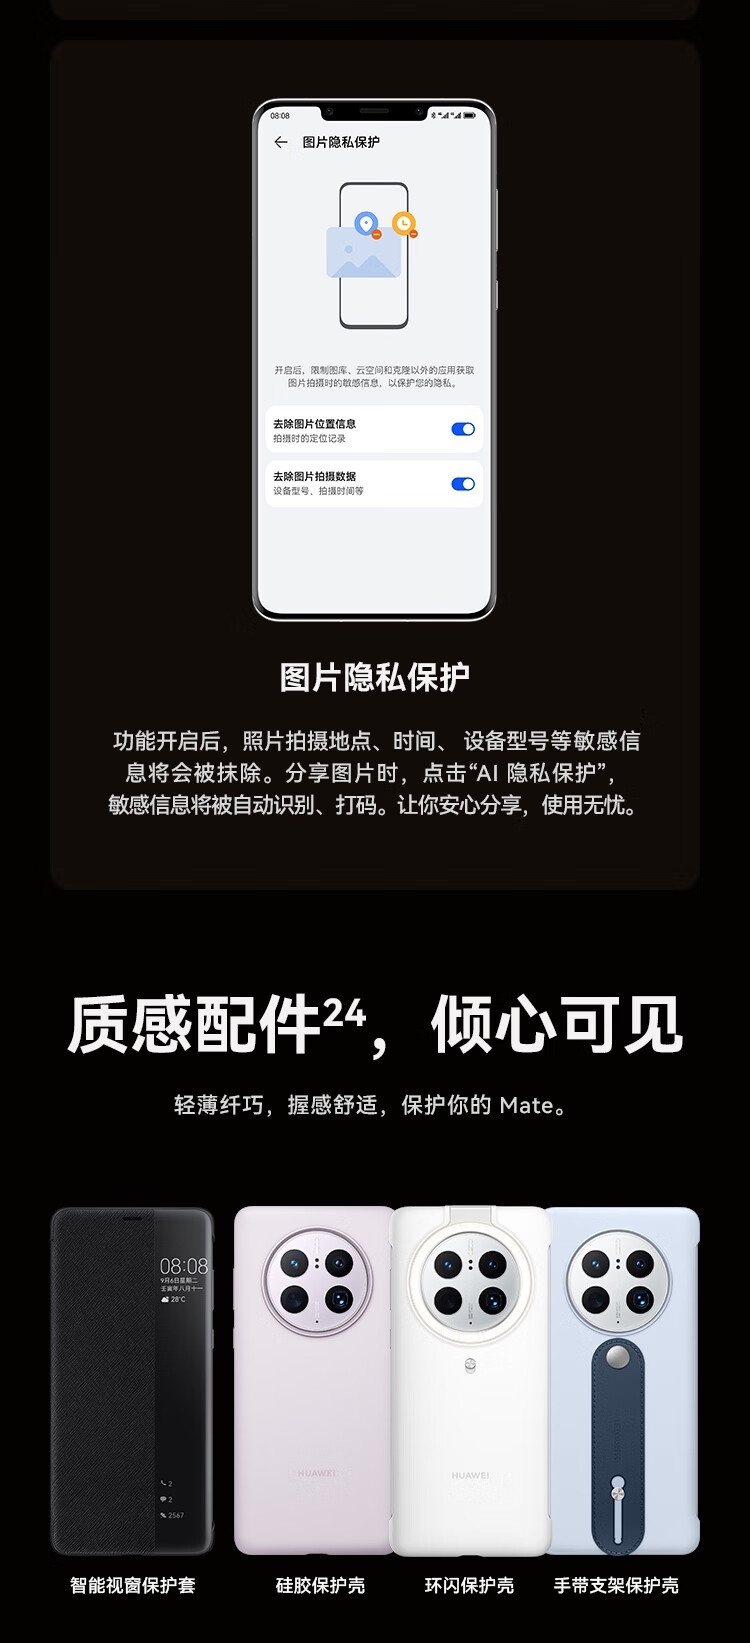 Huawei Mate 50 Pro Dual SIM Black 256GB and 8GB RAM (6941487275366)